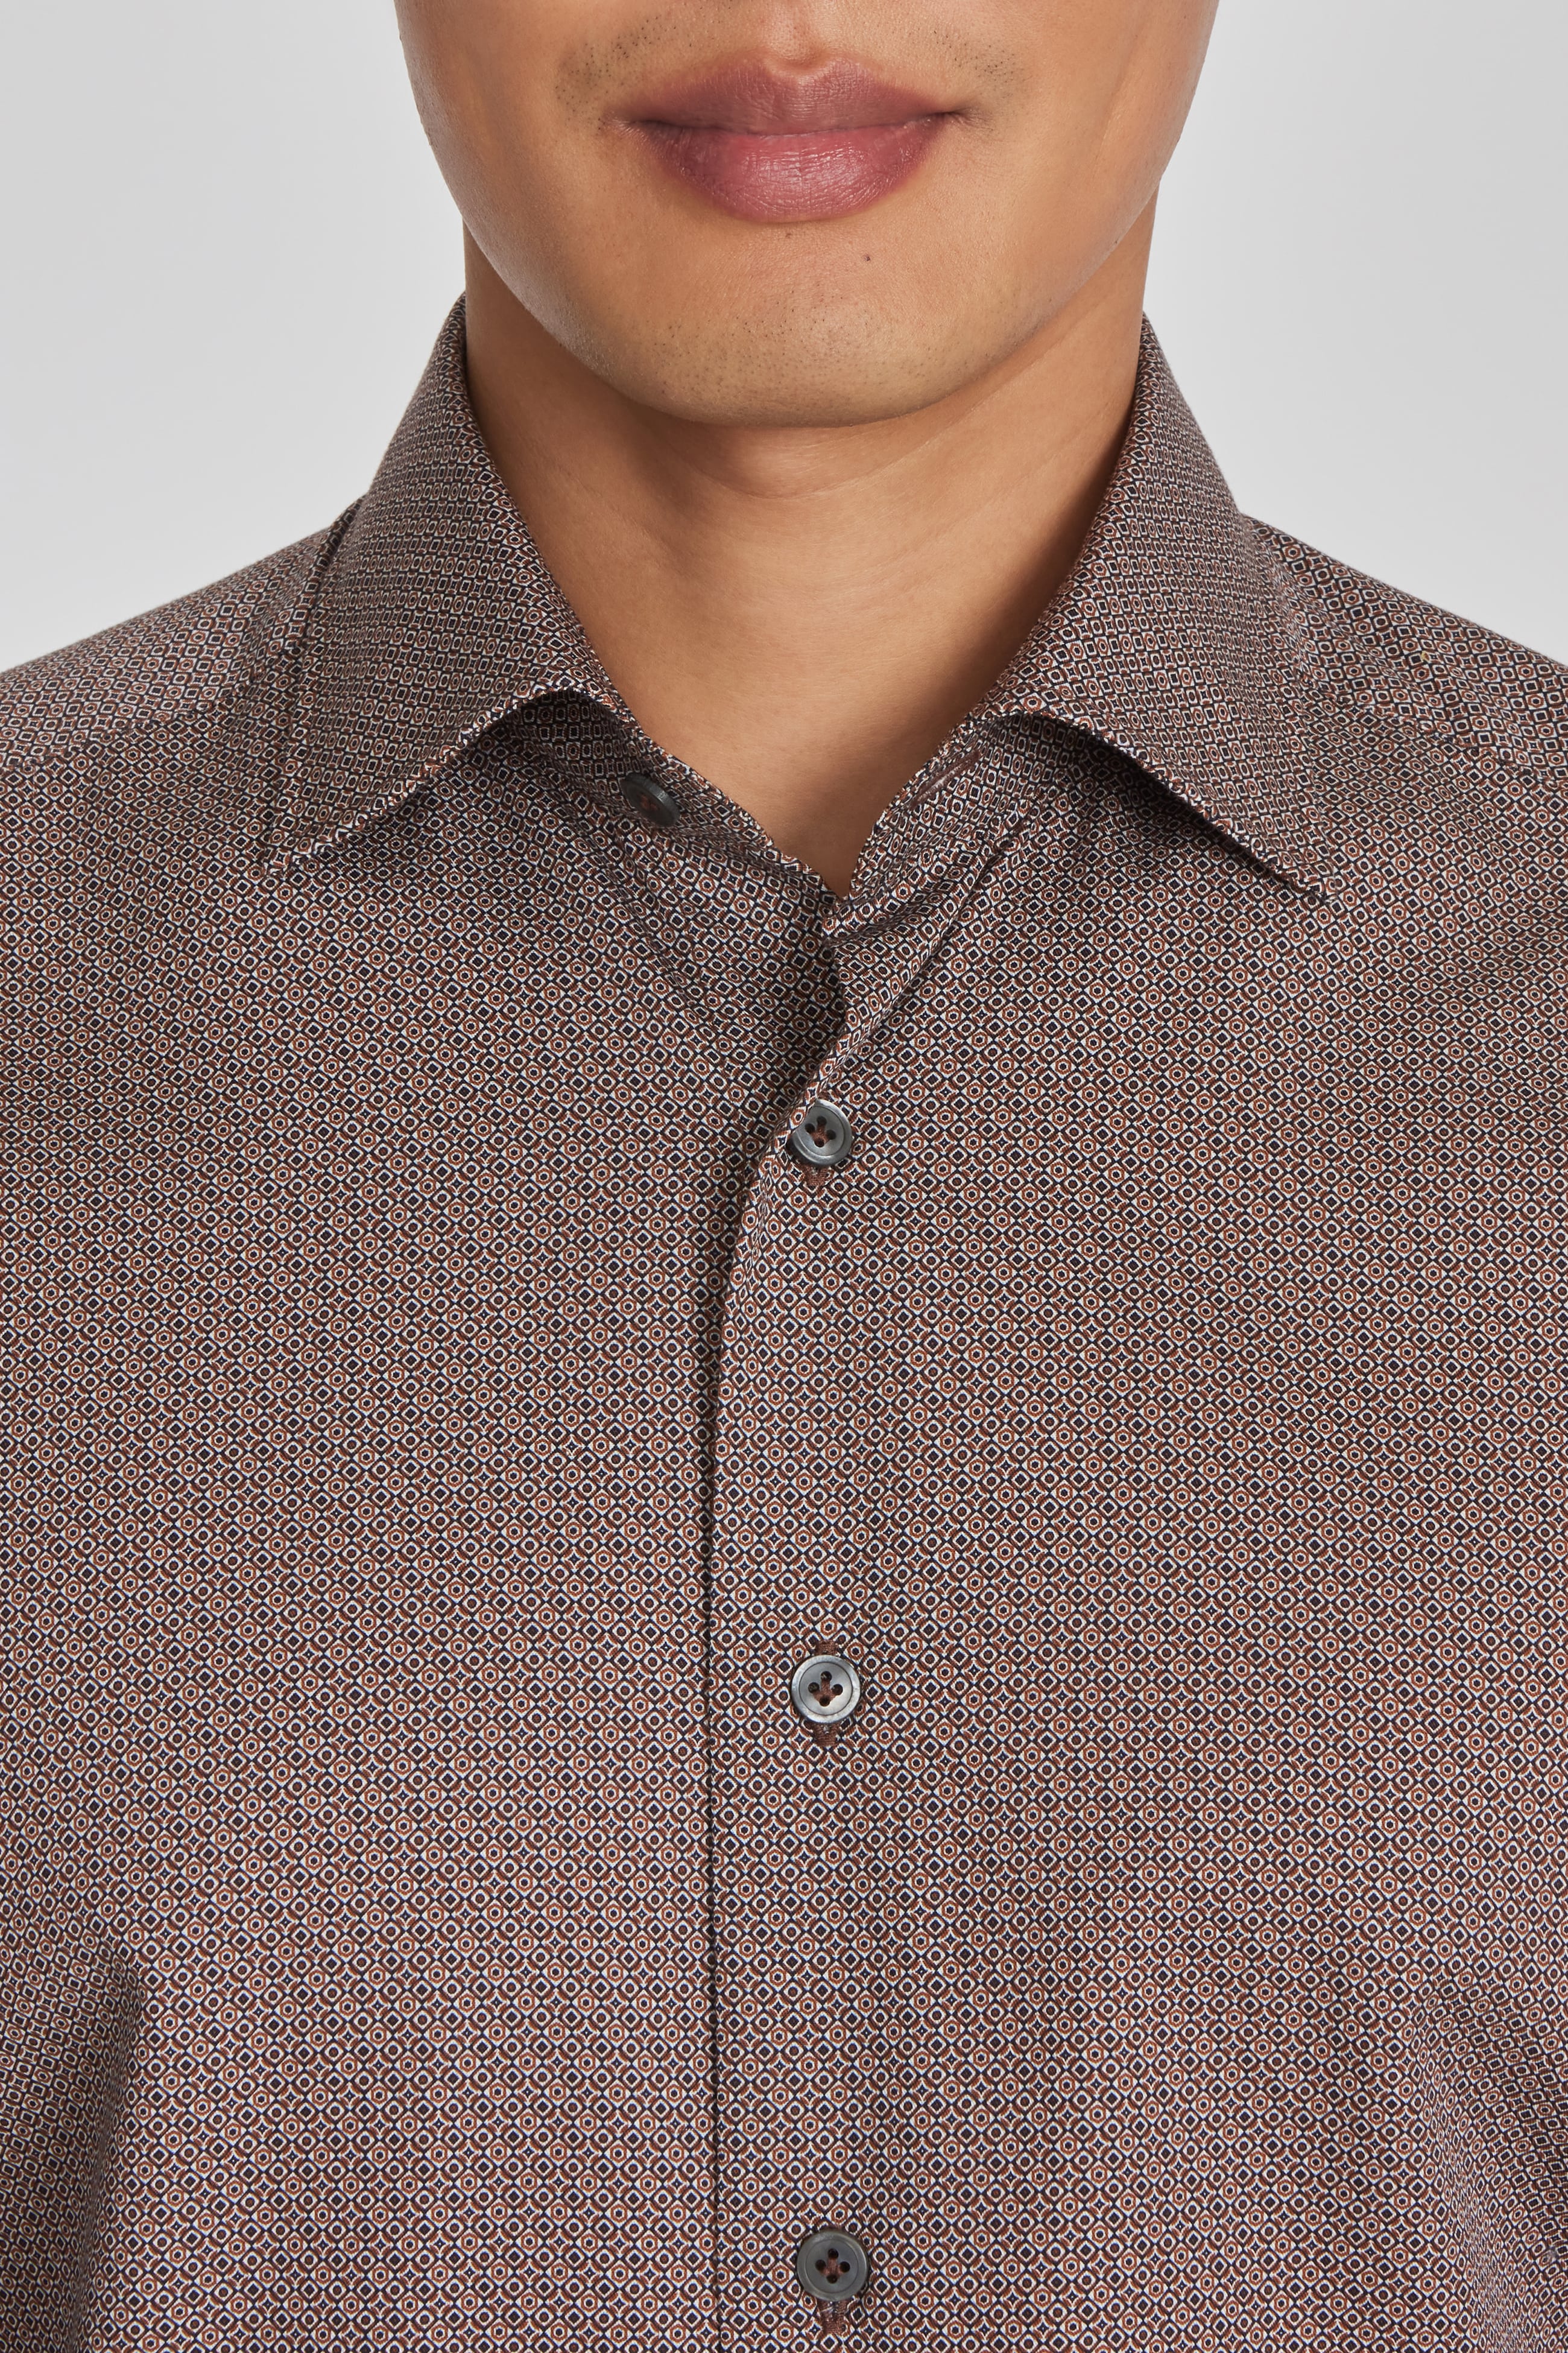 Alt view 1 Geometric Print Cotton Shirt in Brown